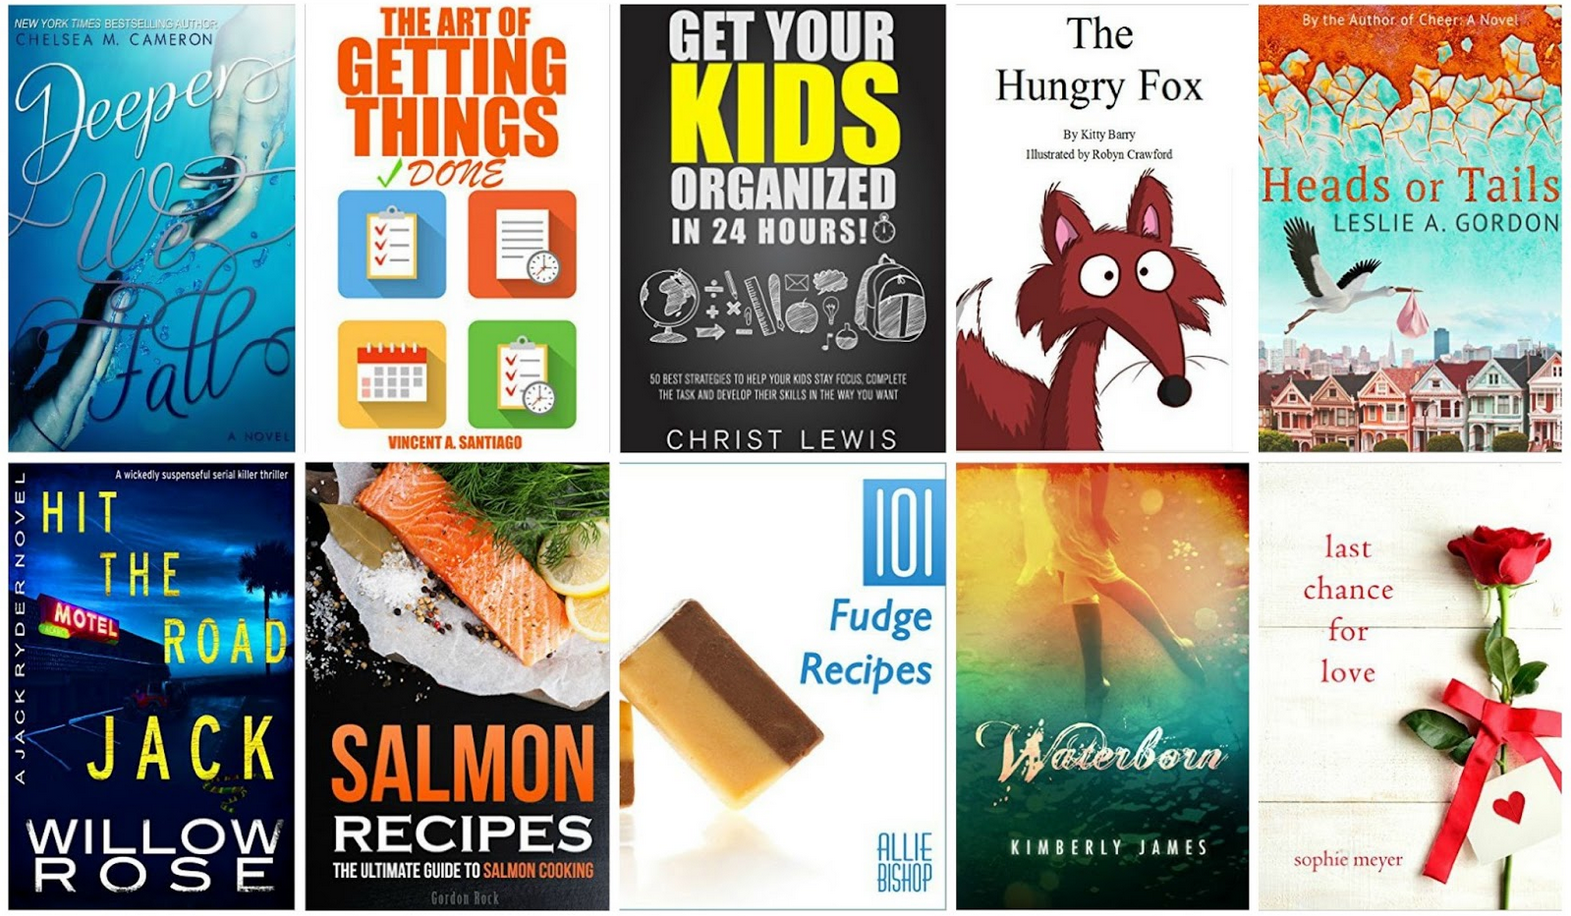 Free ebooks: Last Chance for Love, Salmon Recipes + More Books